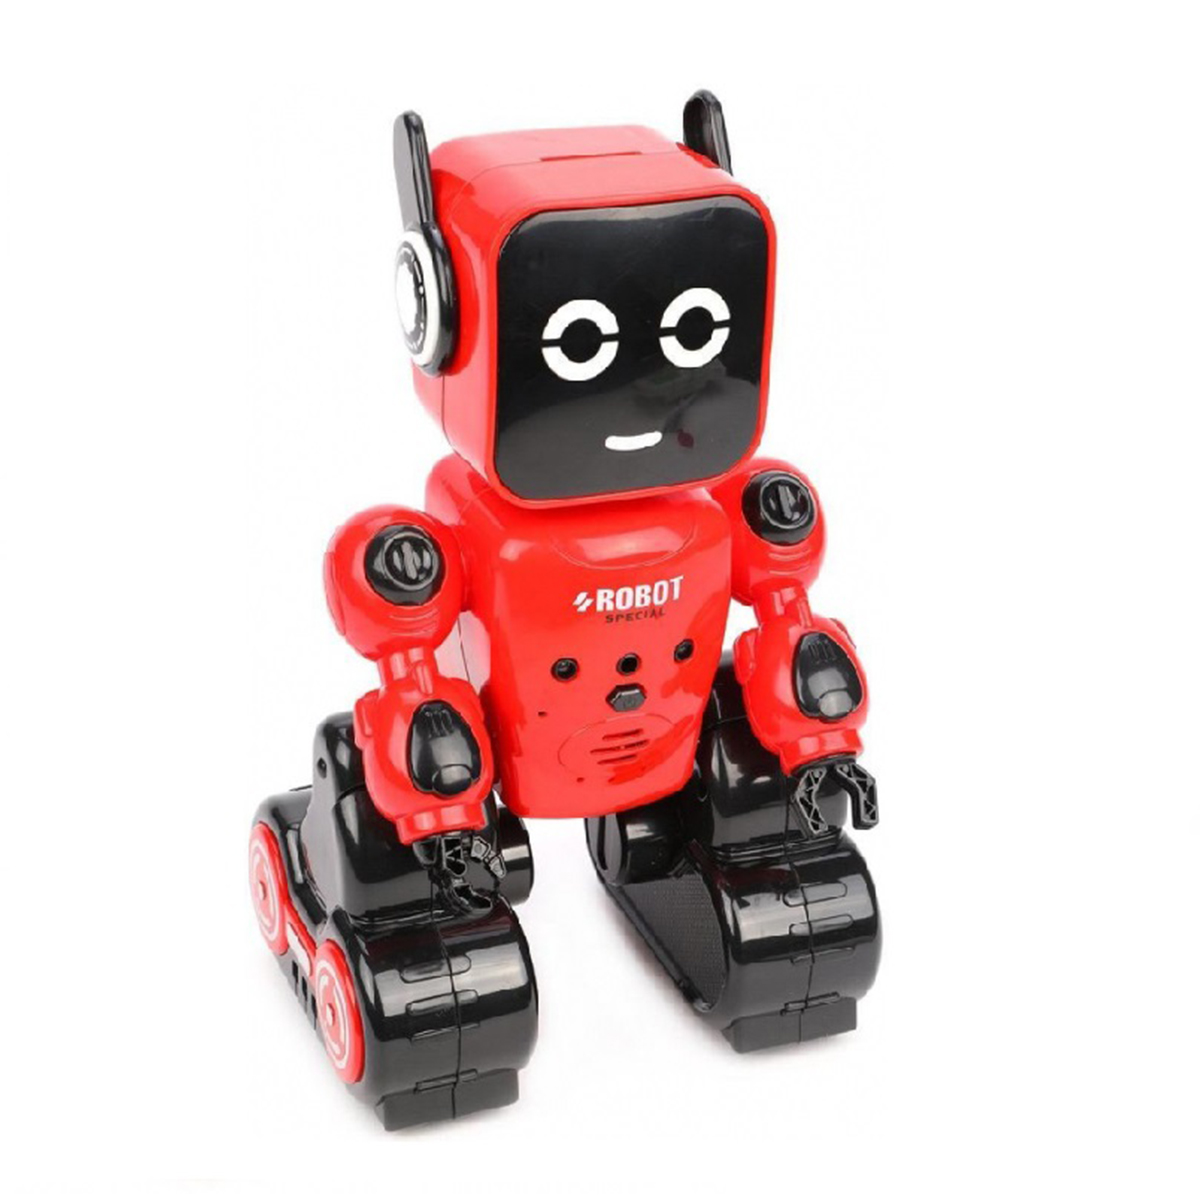 ربات کنترلی مدل robot kyd کد j998 